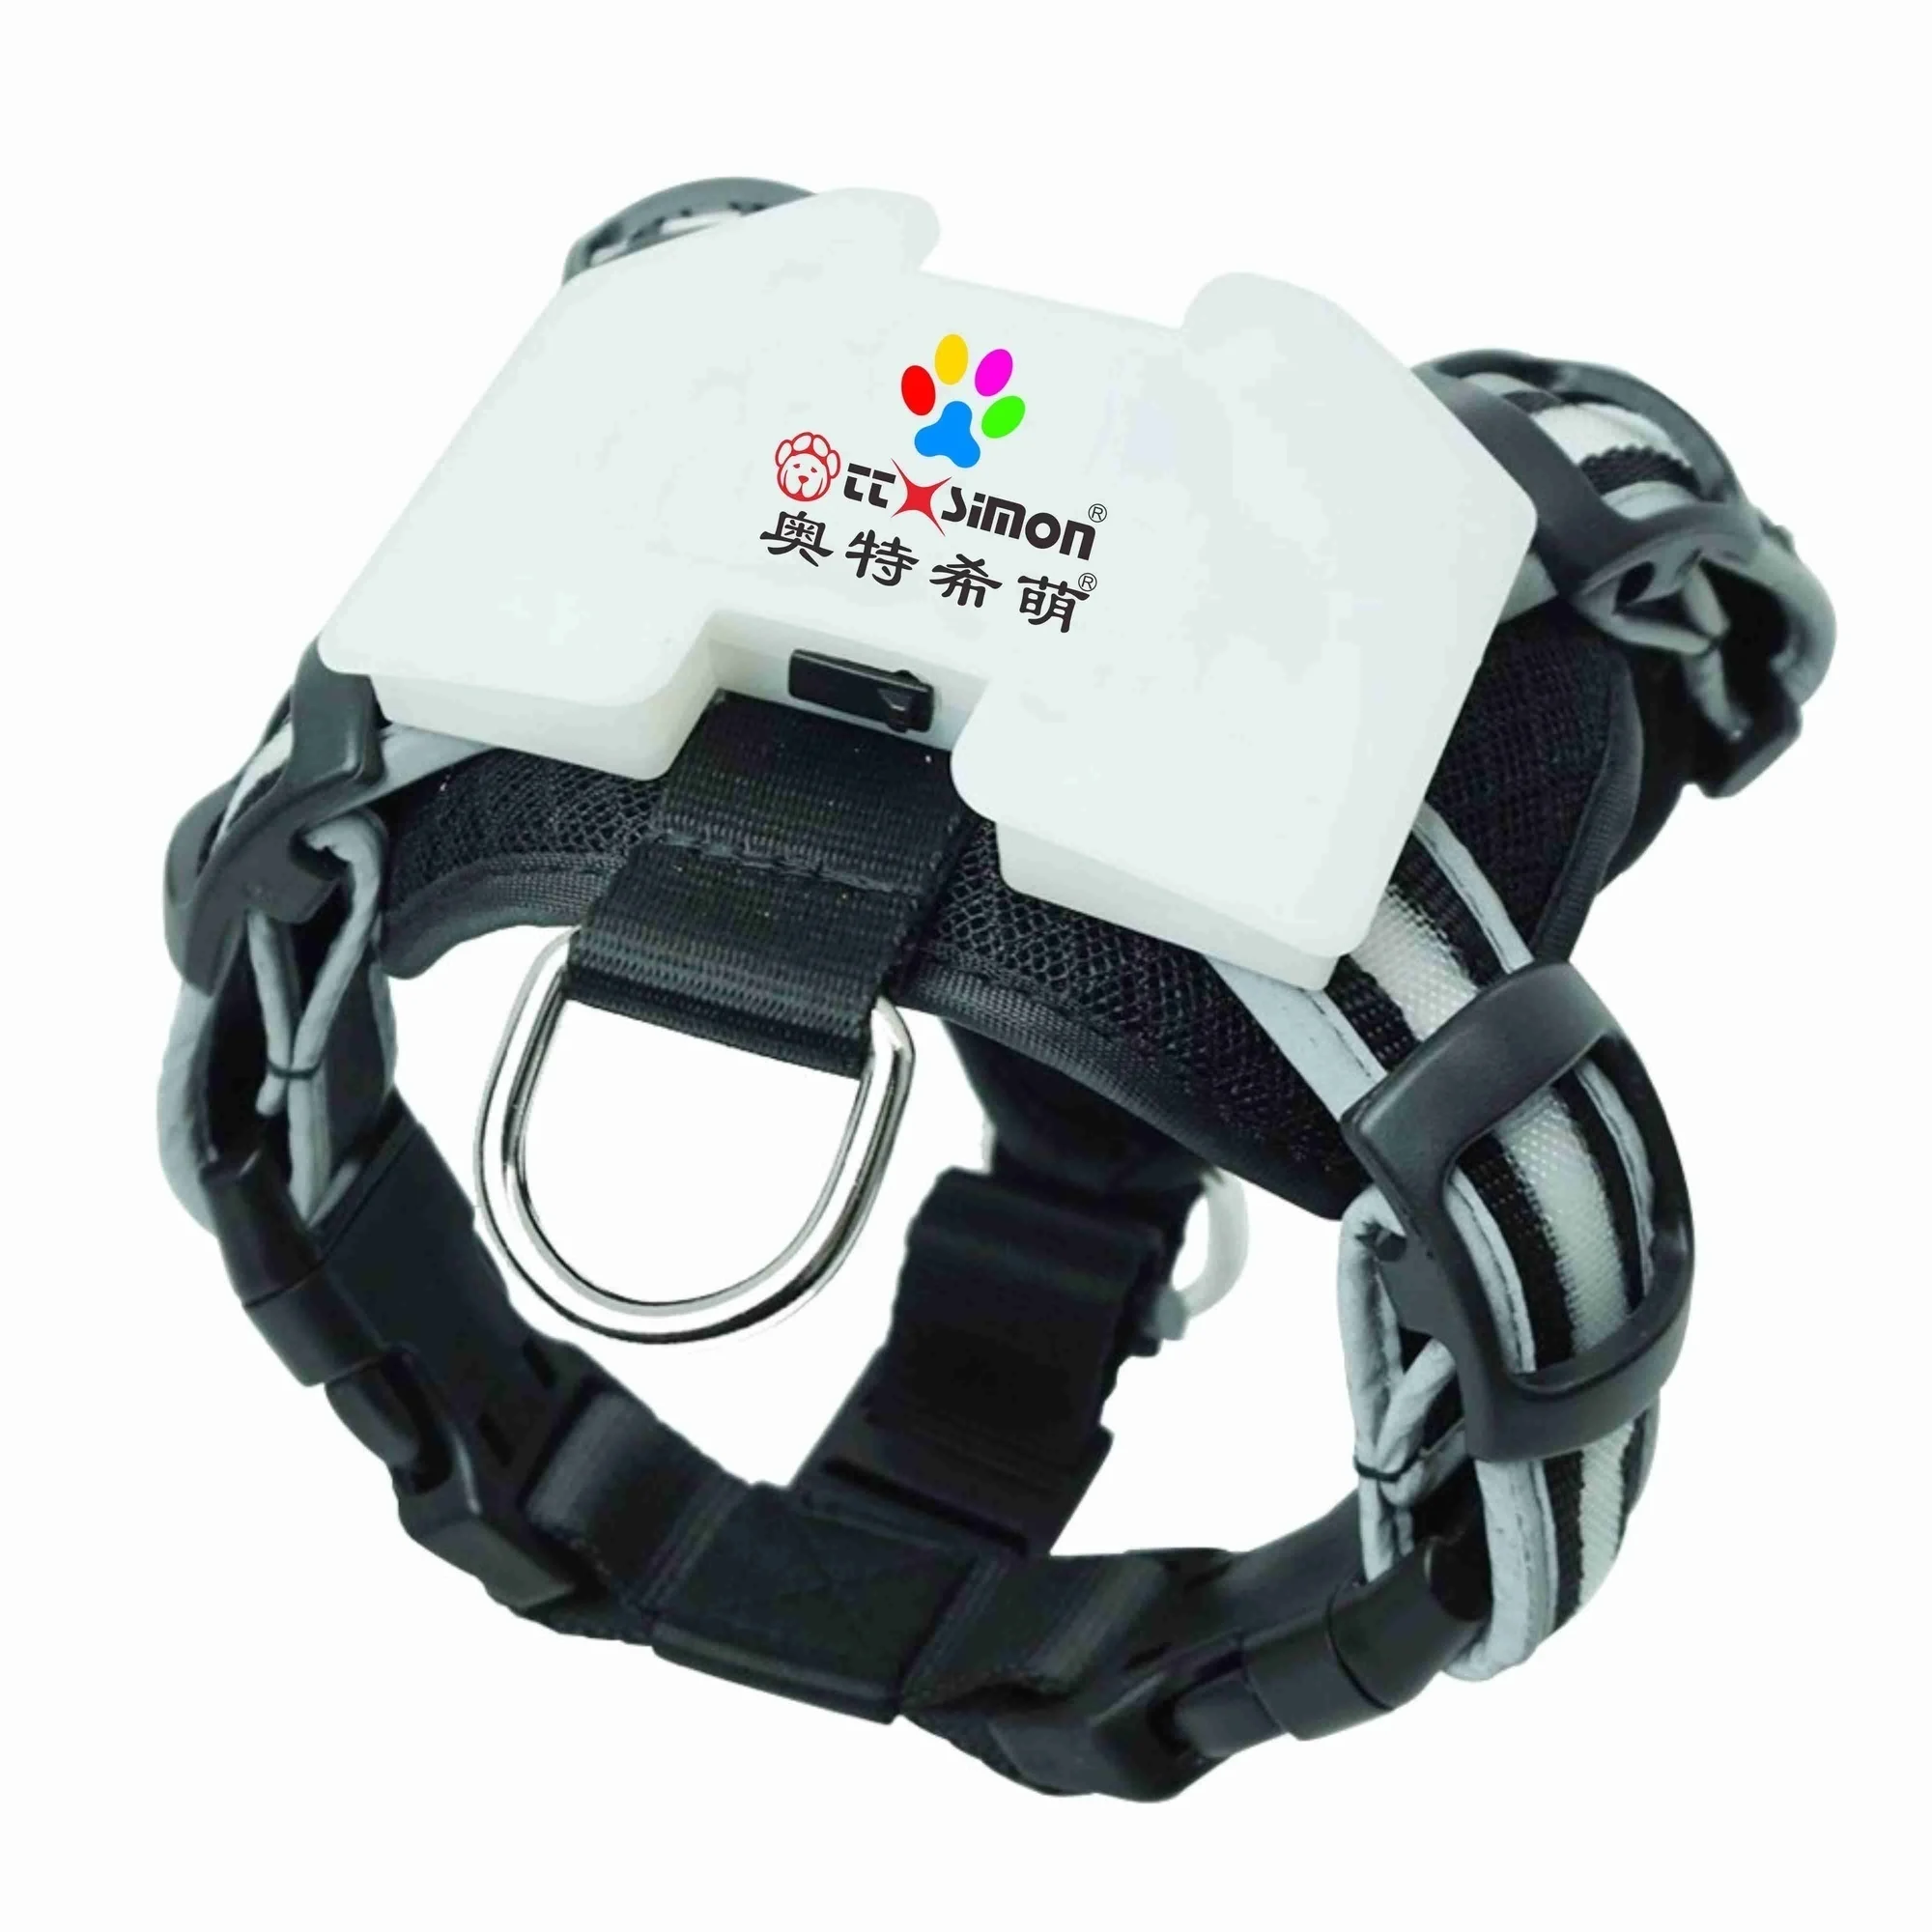 

cc harness dog simon led light service dog harness Factory direct sale LED flashing dog harness with high quality